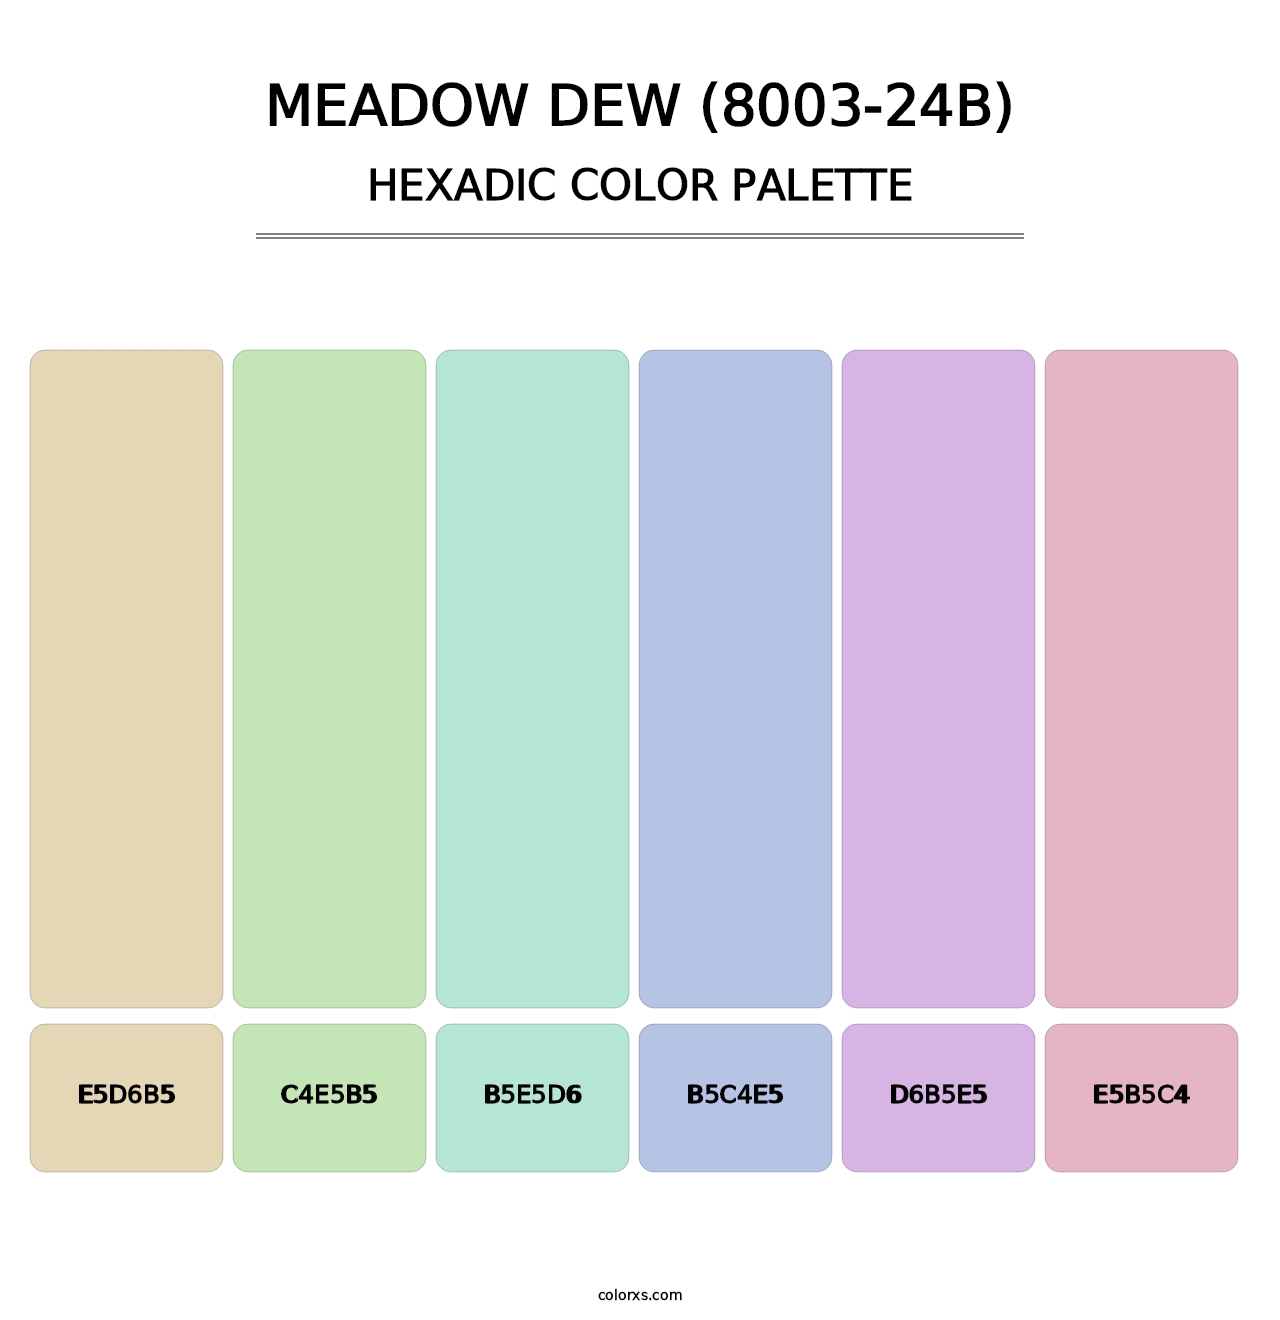 Meadow Dew (8003-24B) - Hexadic Color Palette